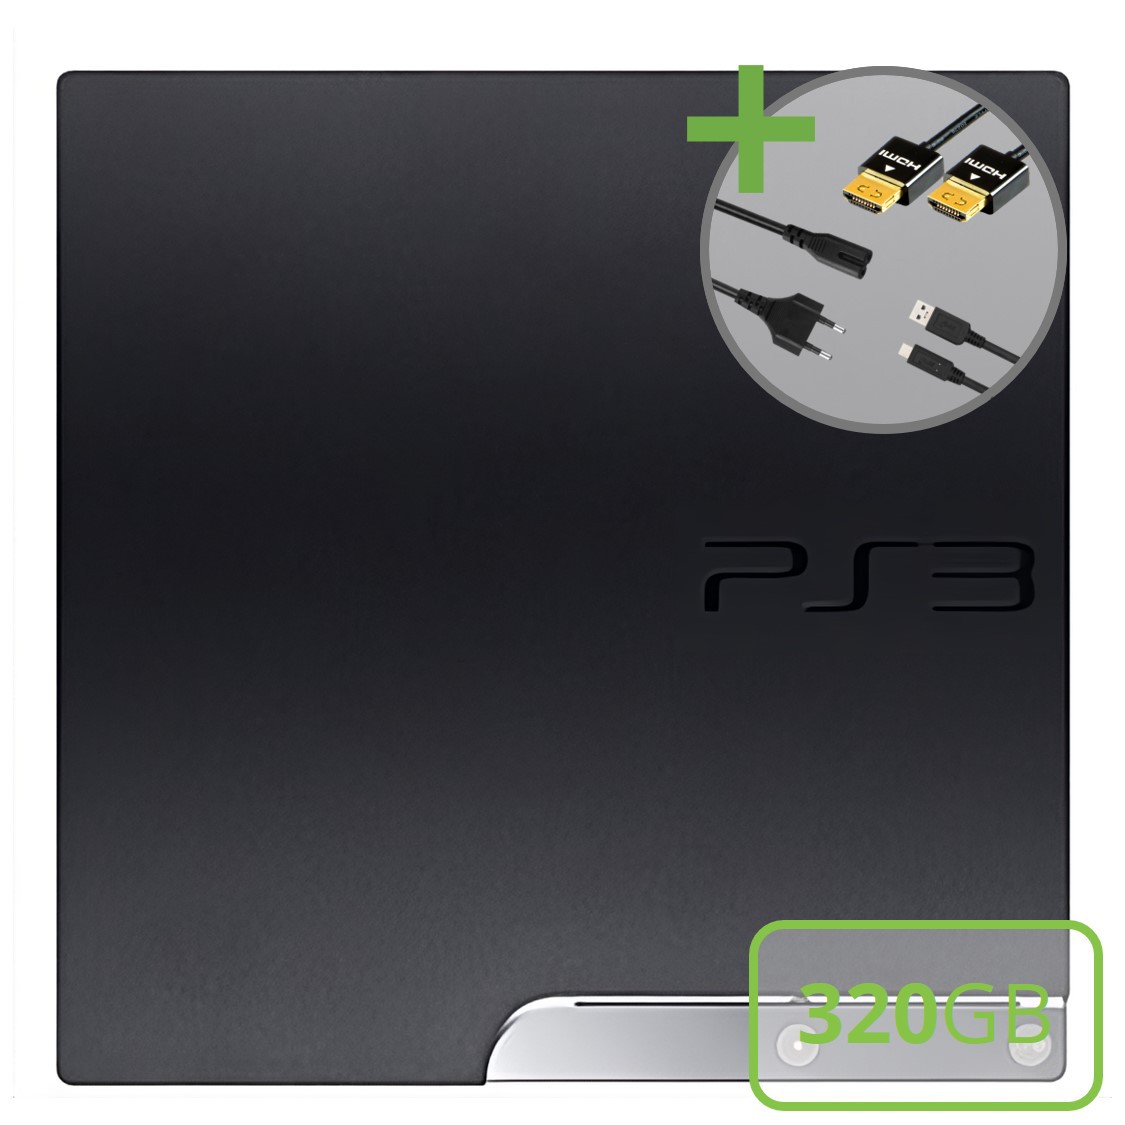 Sony PlayStation 3 Slim (320GB) Starter Pack - DualShock Edition - Playstation 3 Hardware - 3